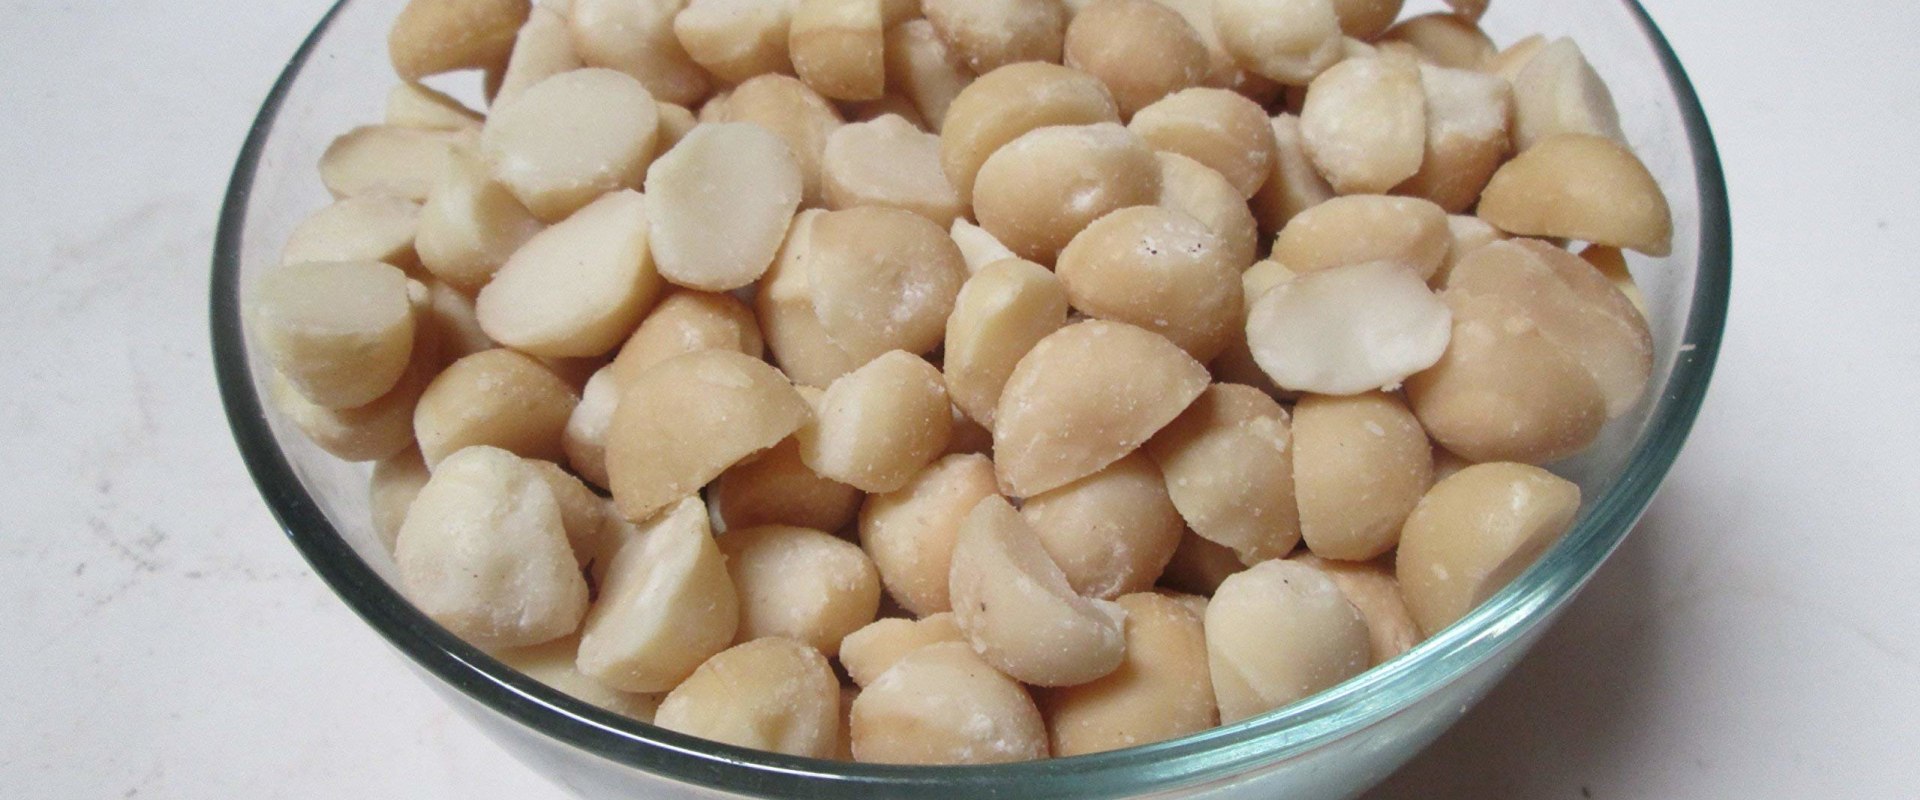 Where to buy bulk macadamia nuts?